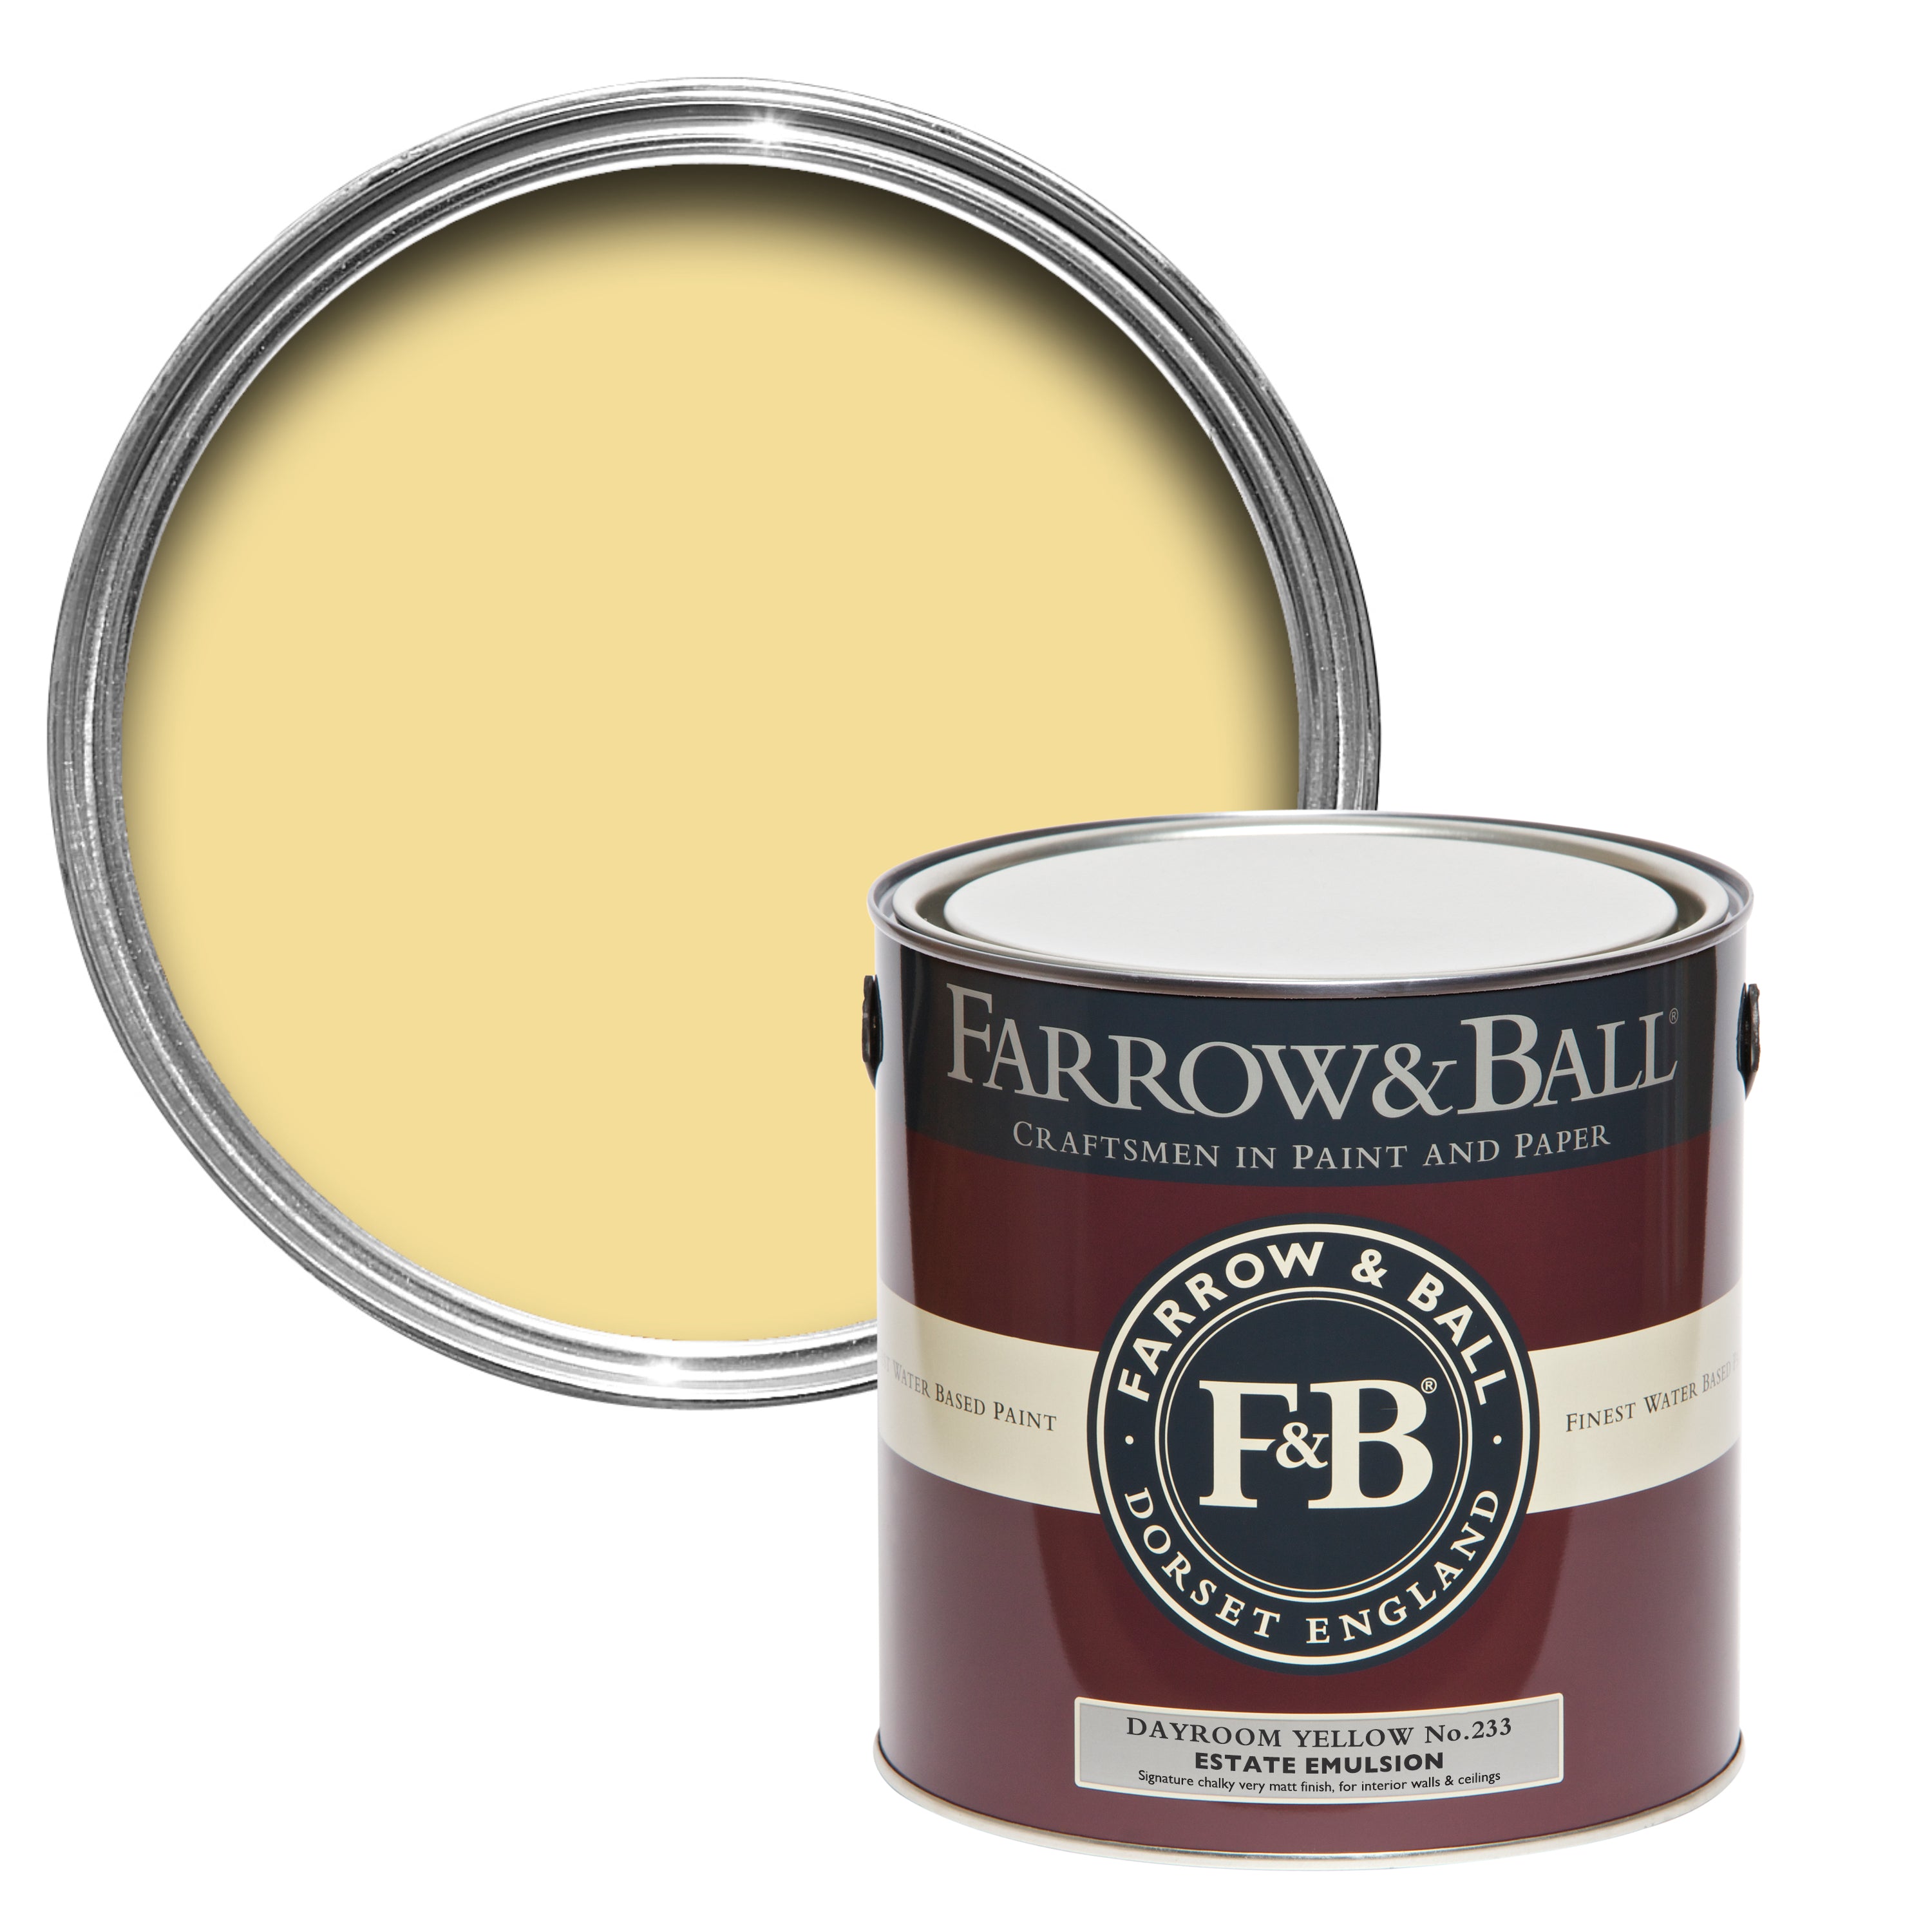 Dayroom Yellow No 233 | Farrow & Ball